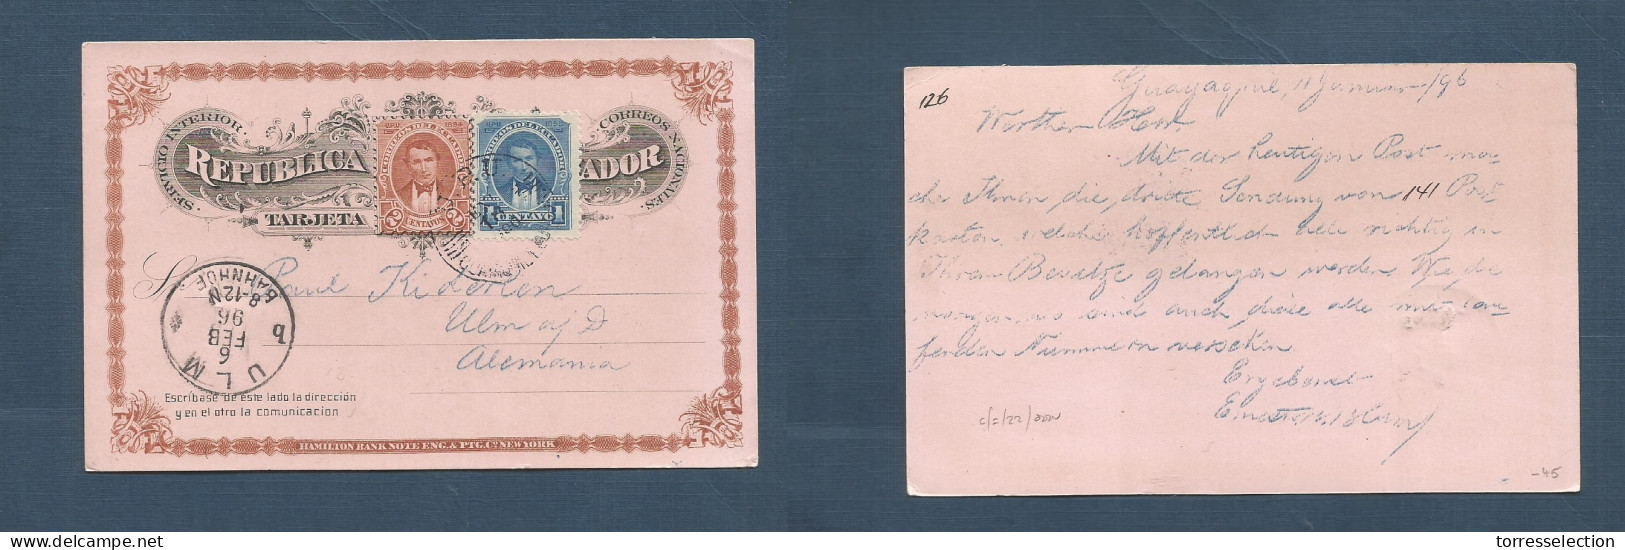 ECUADOR. 1896 (Ene 18) Guayaquil - Germany, Ulm (6 Feb) 2c Brown Stat Card + 1 A Blue Adtl, Tied Cds. Arrival On Front.  - Ecuador